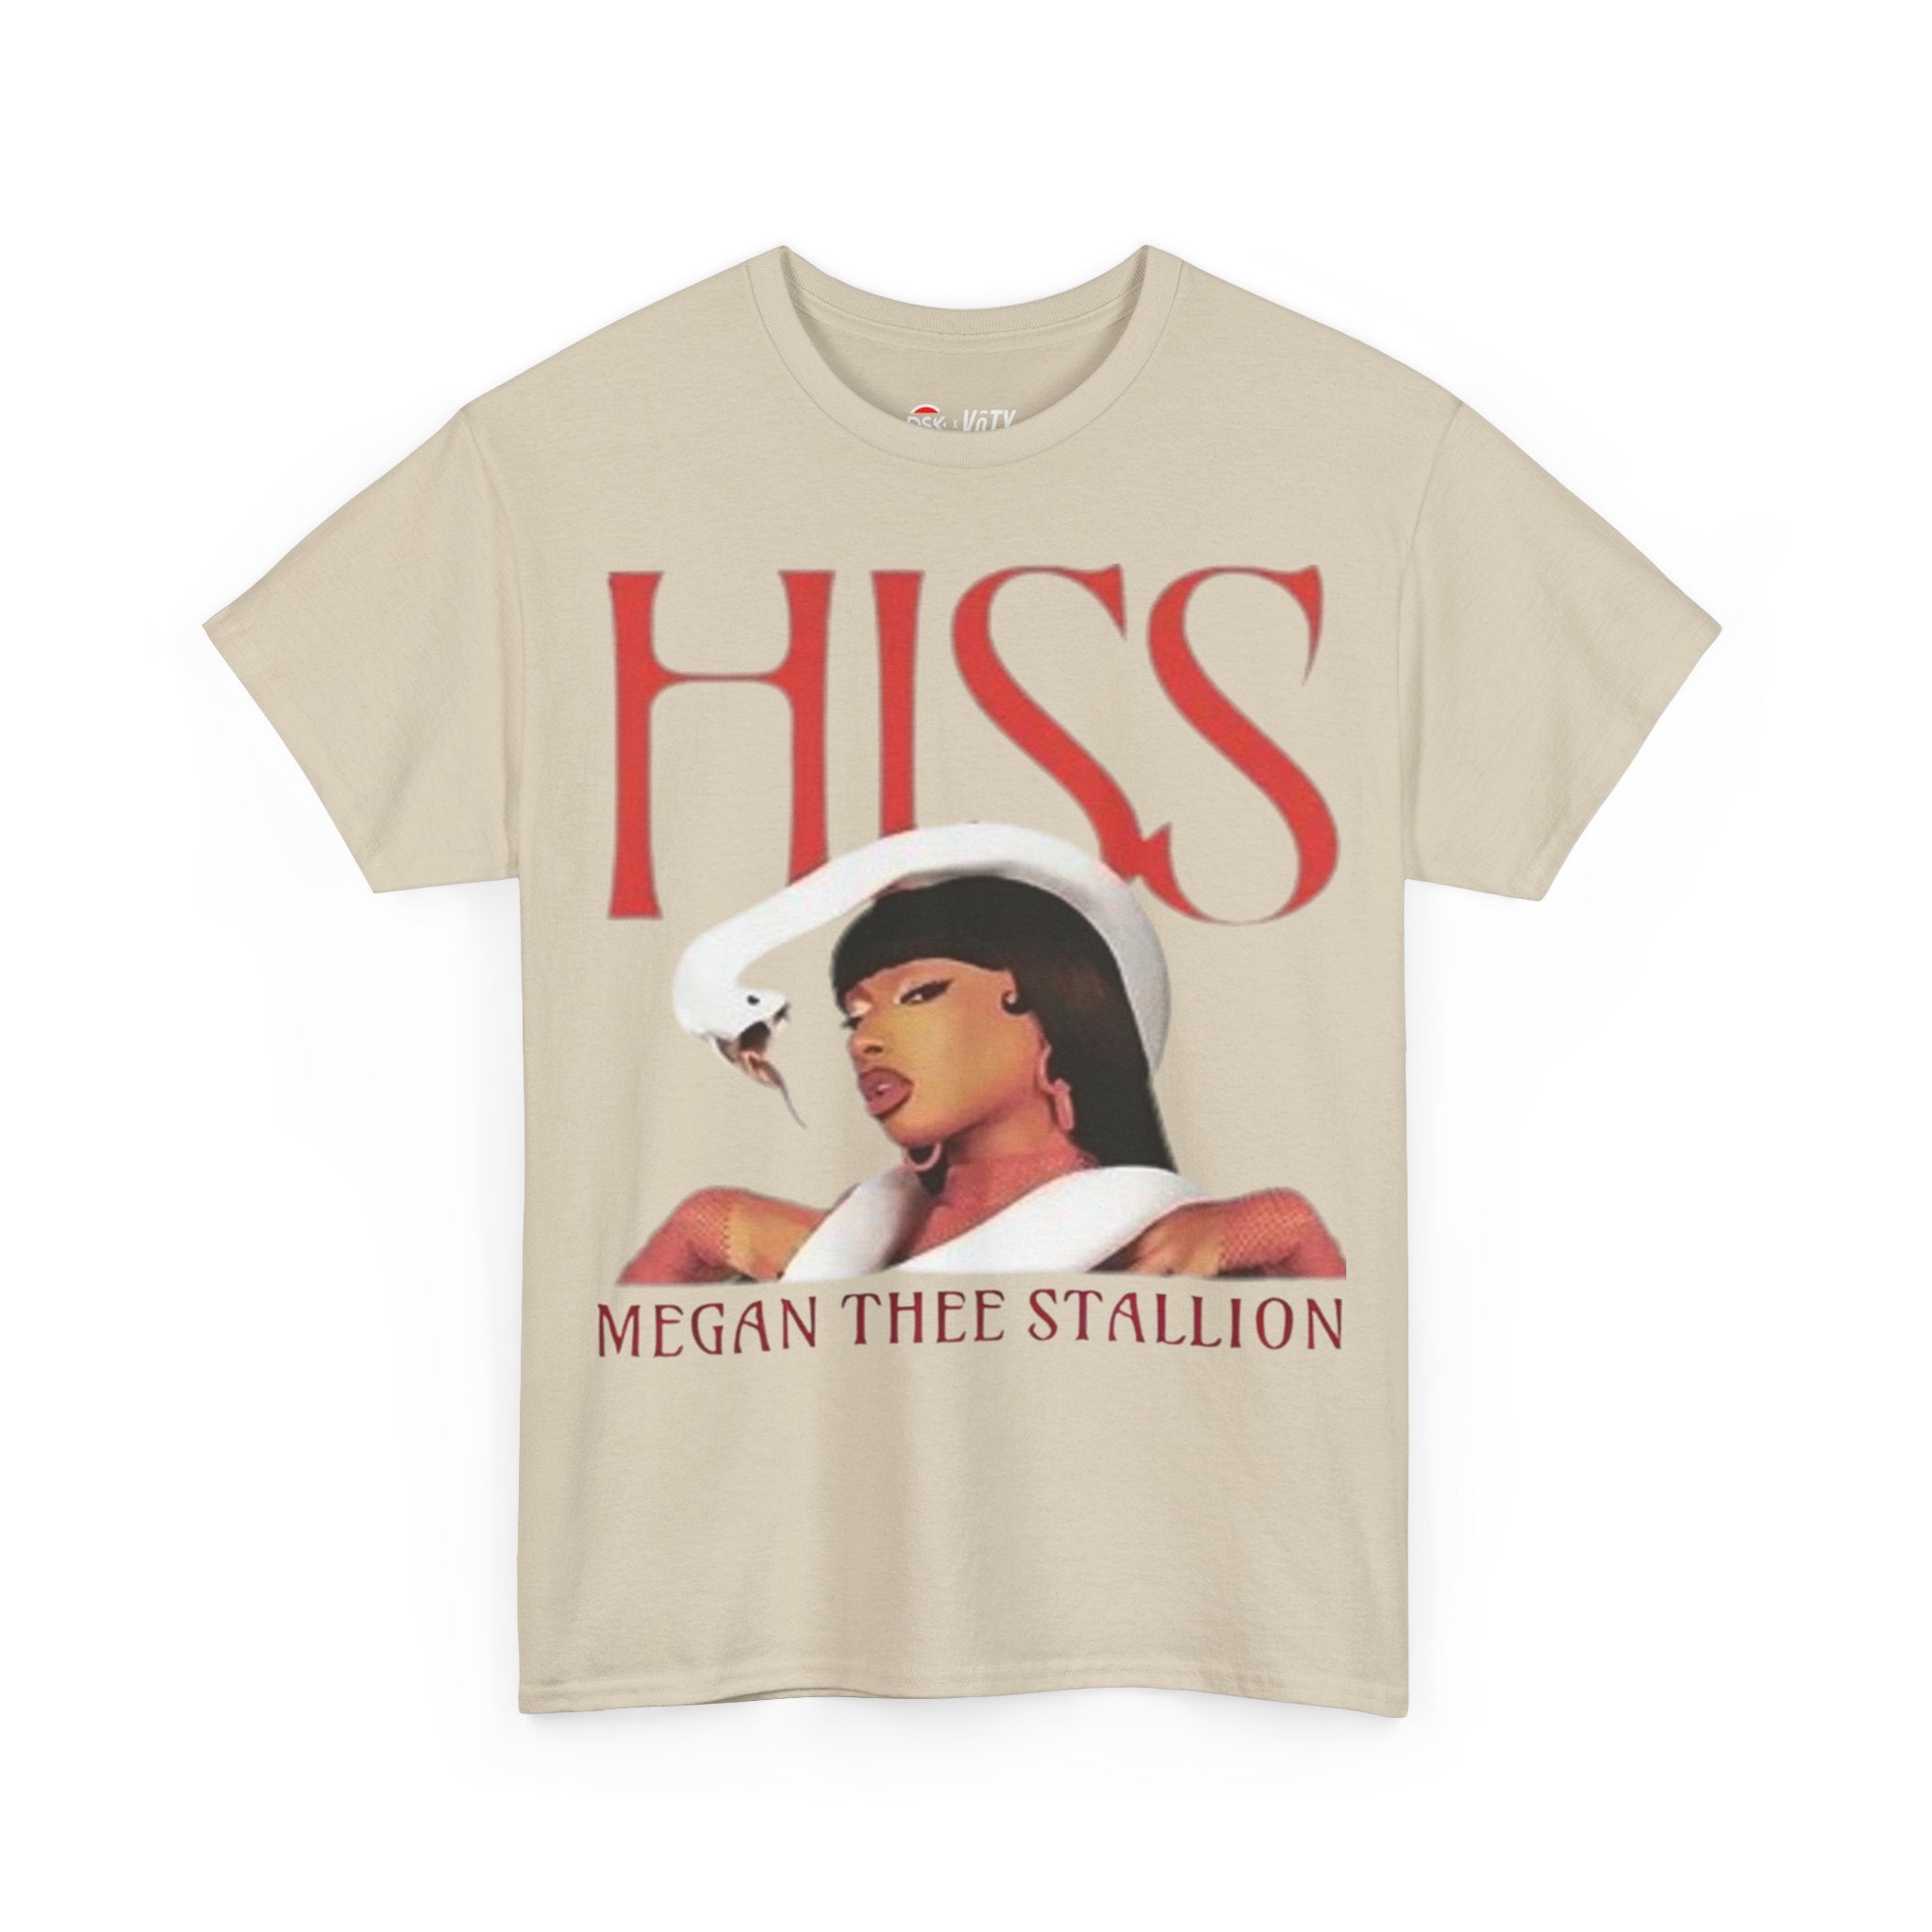 Meg The Stallion "HISS" T-Shirt